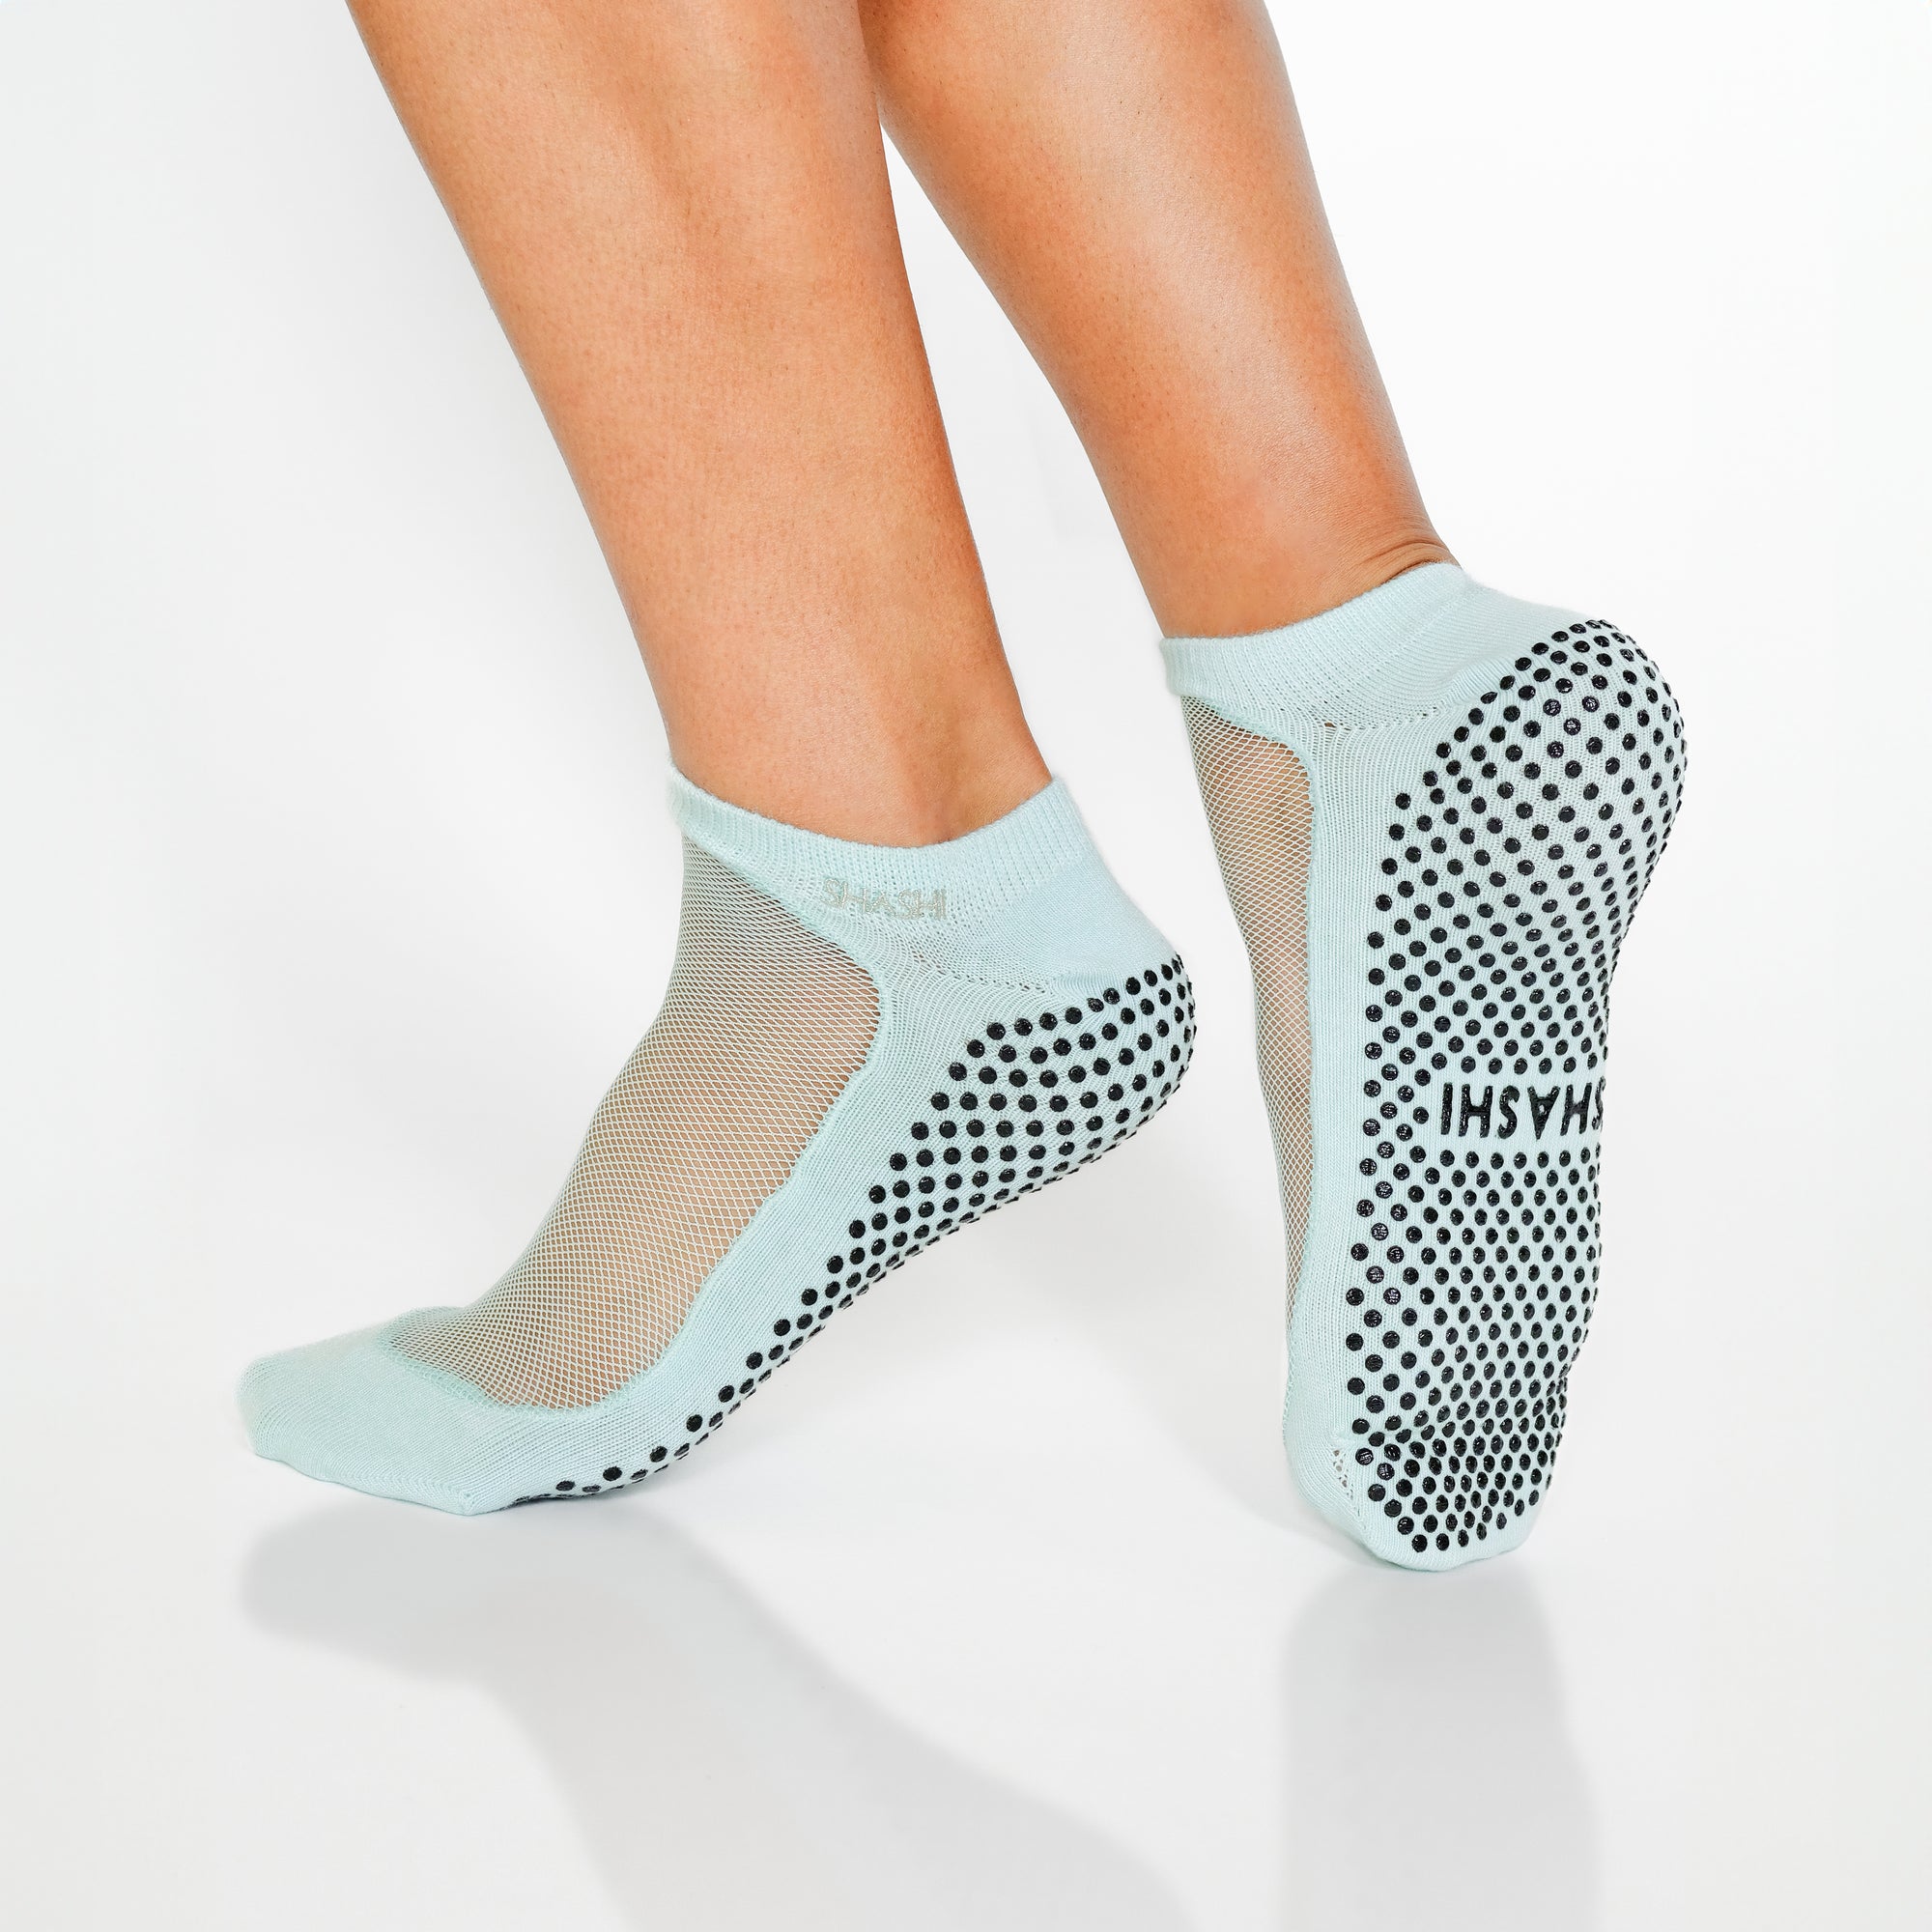 Buy SHASHI Fun Yoga Socks for Women Non Slip Socks, Women Sparkle